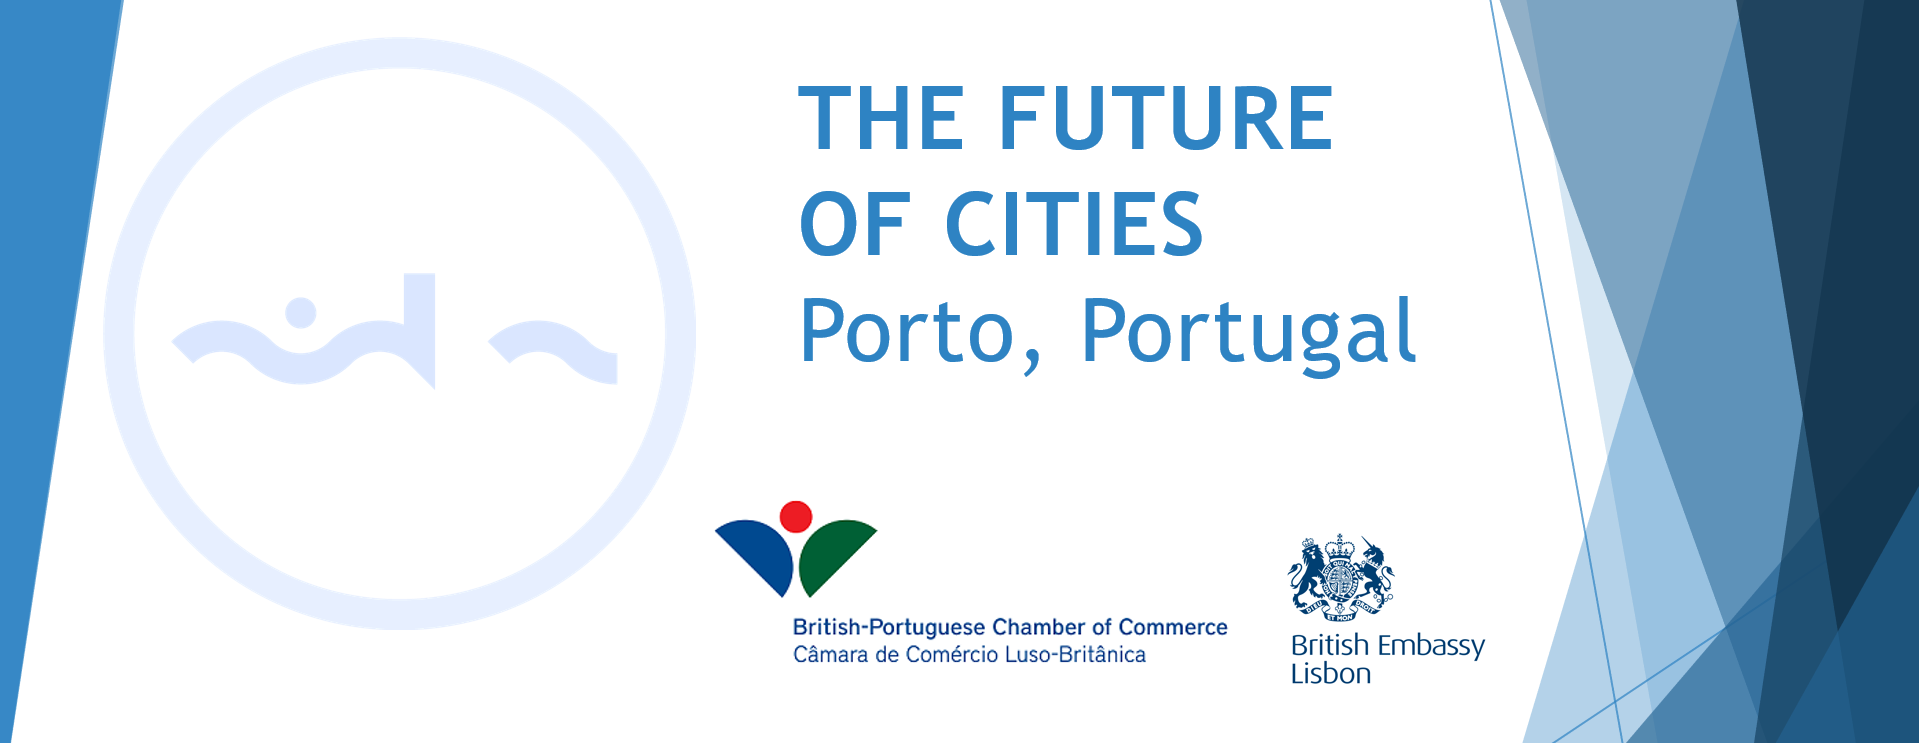 Embaixada Britânica | BPCC - The Future of Cities